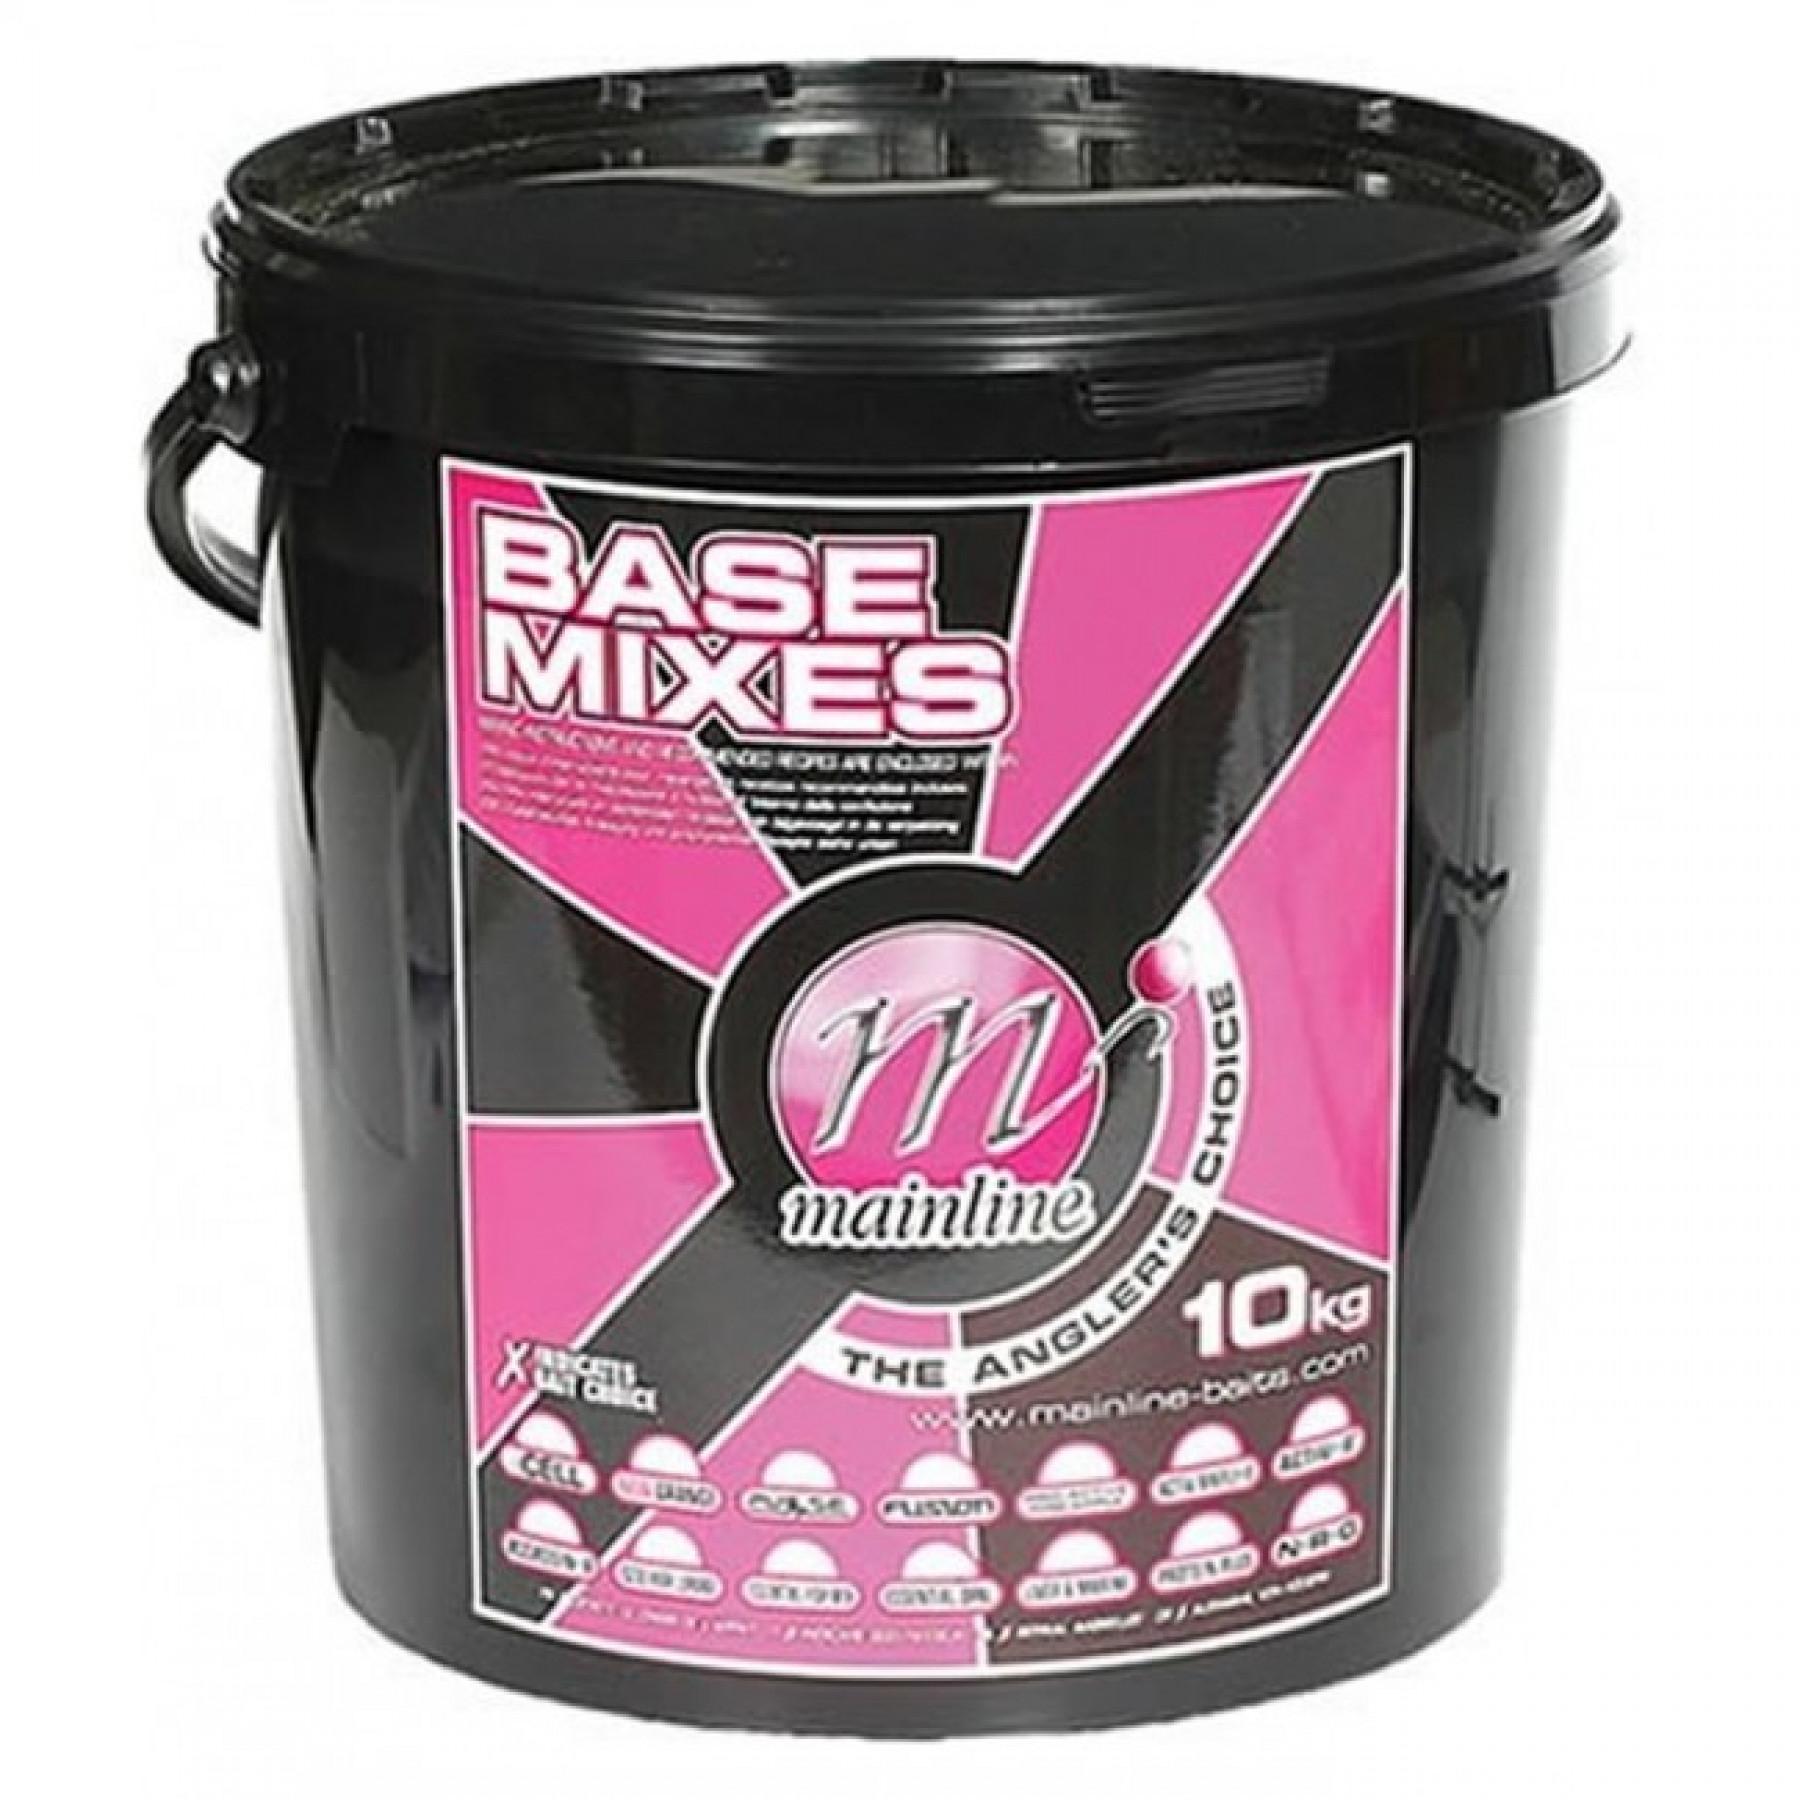 Base mix Mainline Cell 10kg